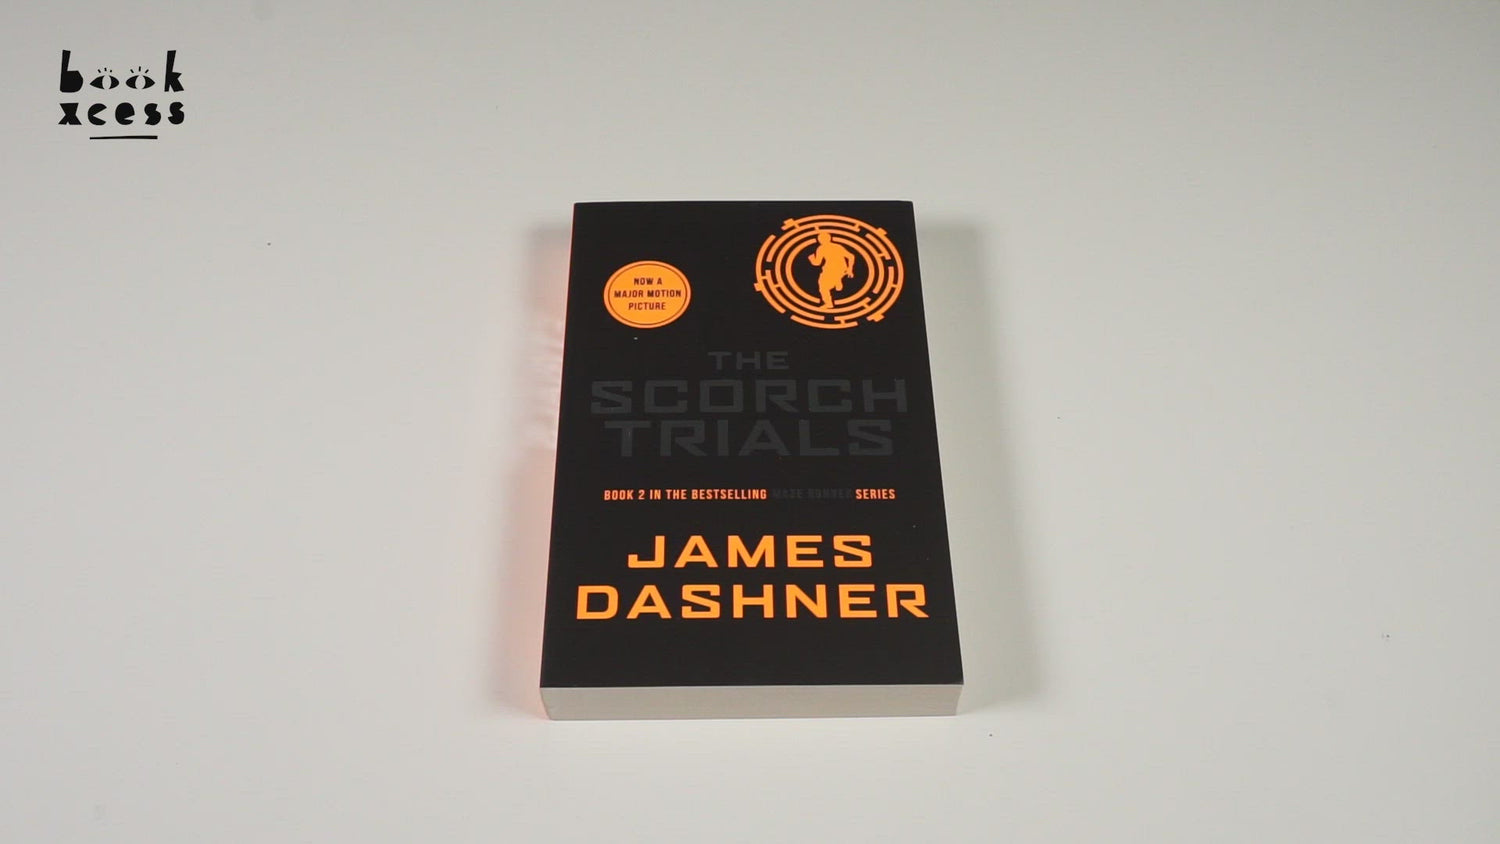 The Scorch Trials (Maze Runner, Book Two) (The Maze Runner Series #2)  (Paperback)